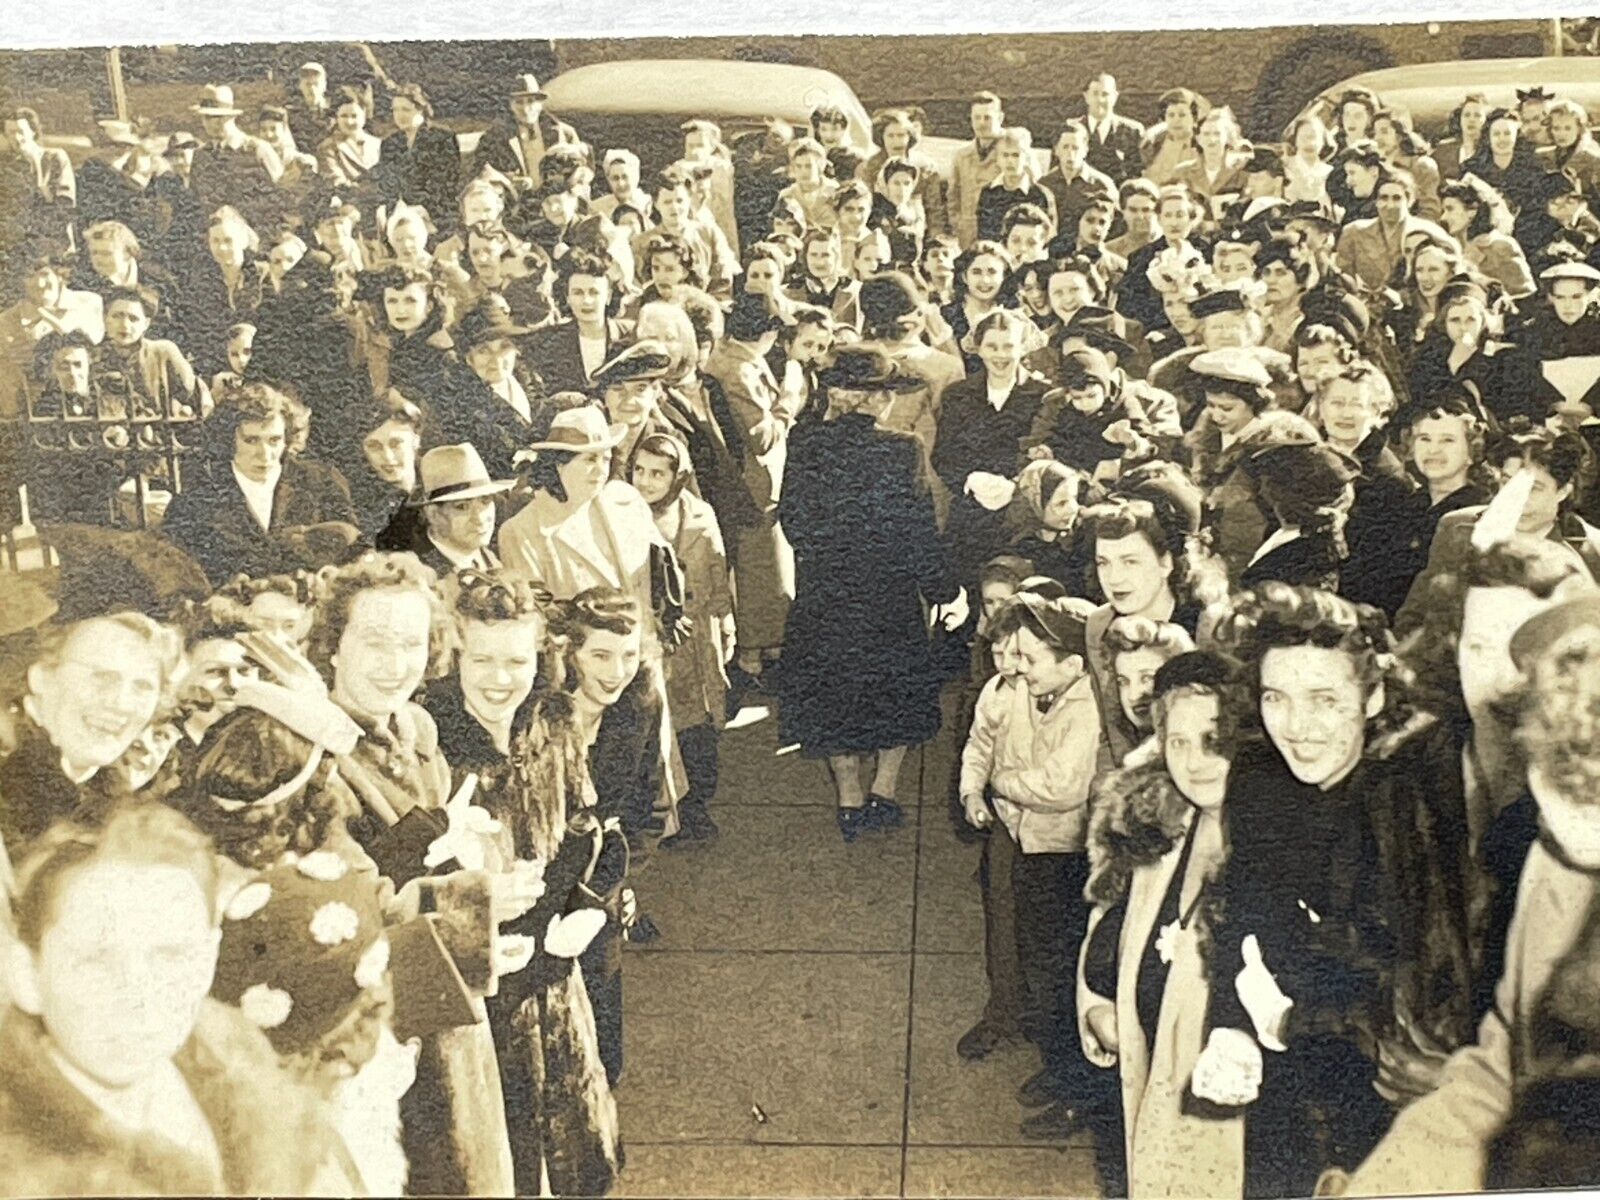 W4 Photograph Big Large Crowd Looking Up At Camera Man 1930-40's Men Women 